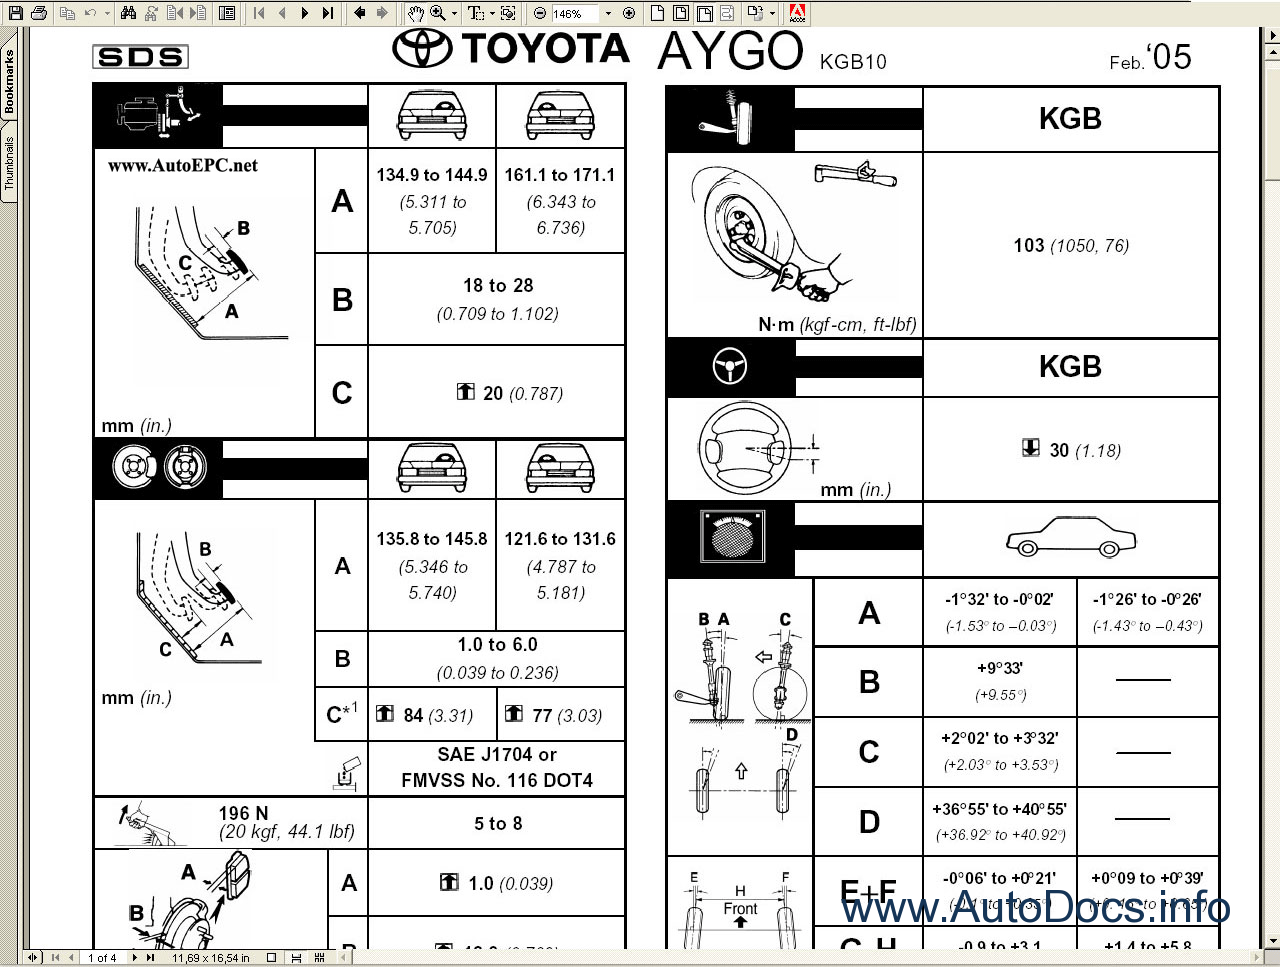 Toyota Aygo Workshop Manual Pdf Download